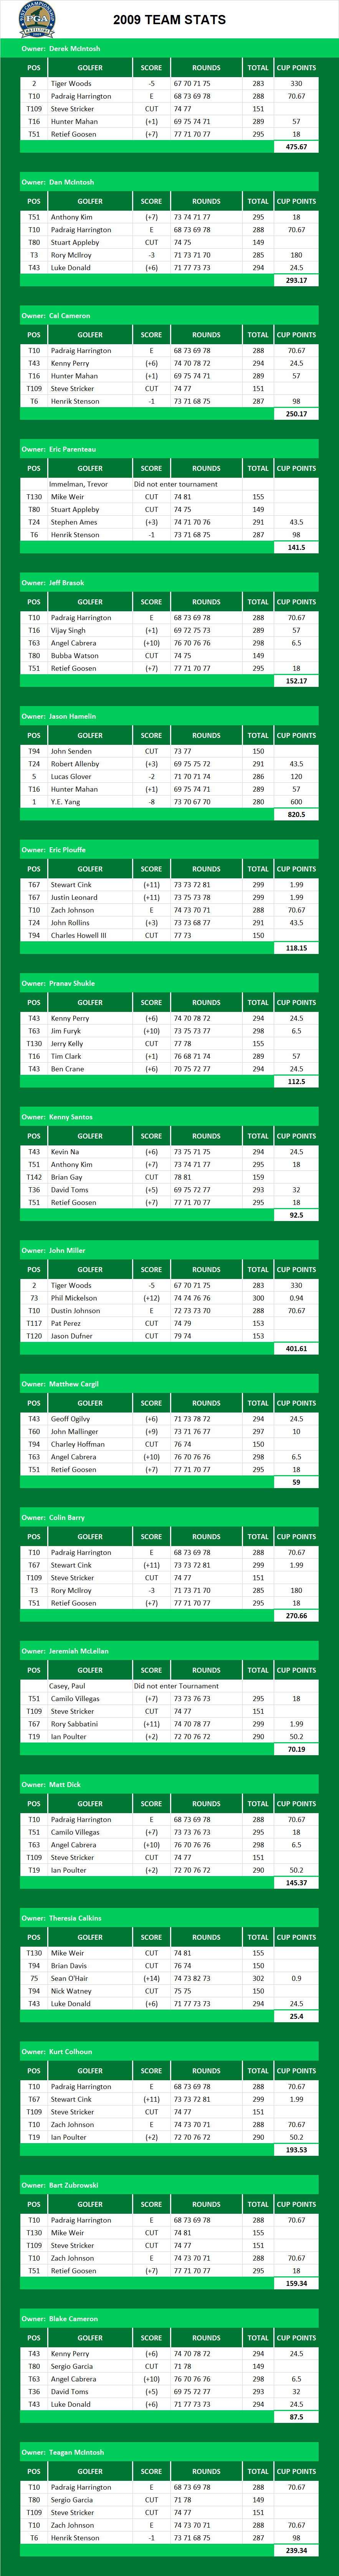 2009 PGA Championship Picks